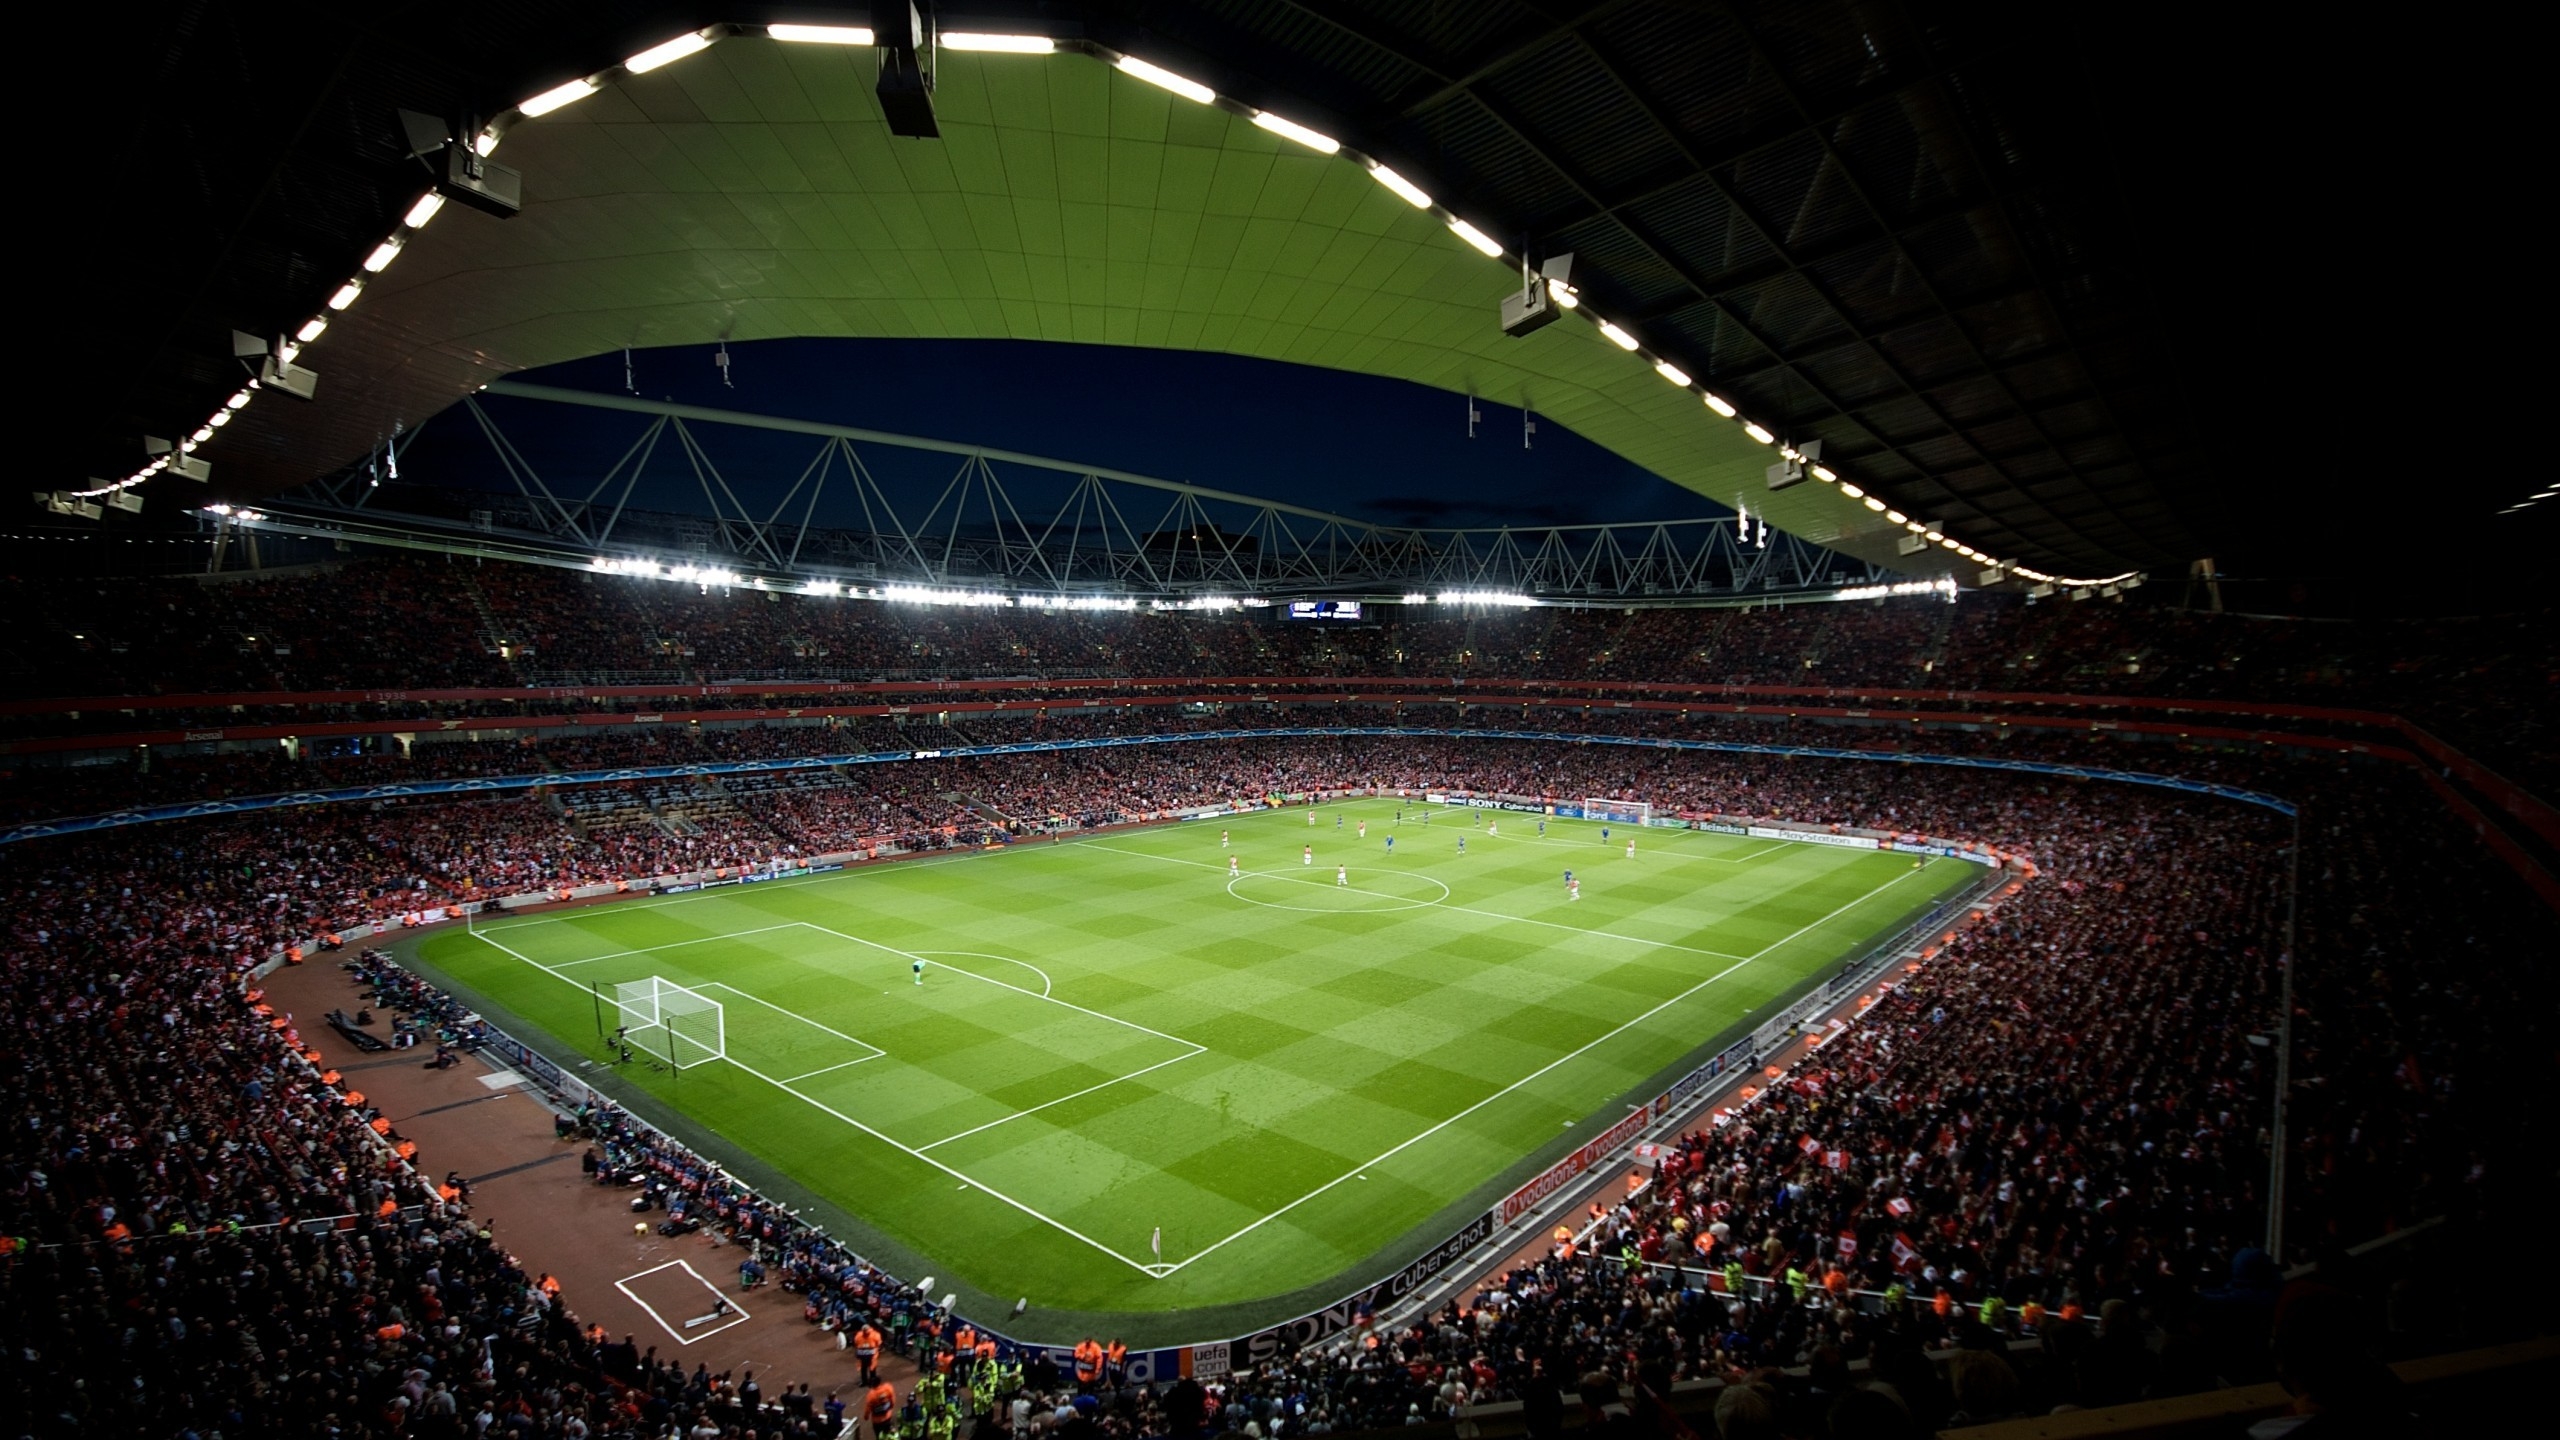 Stadium in Emirates for 2560x1440 HDTV resolution